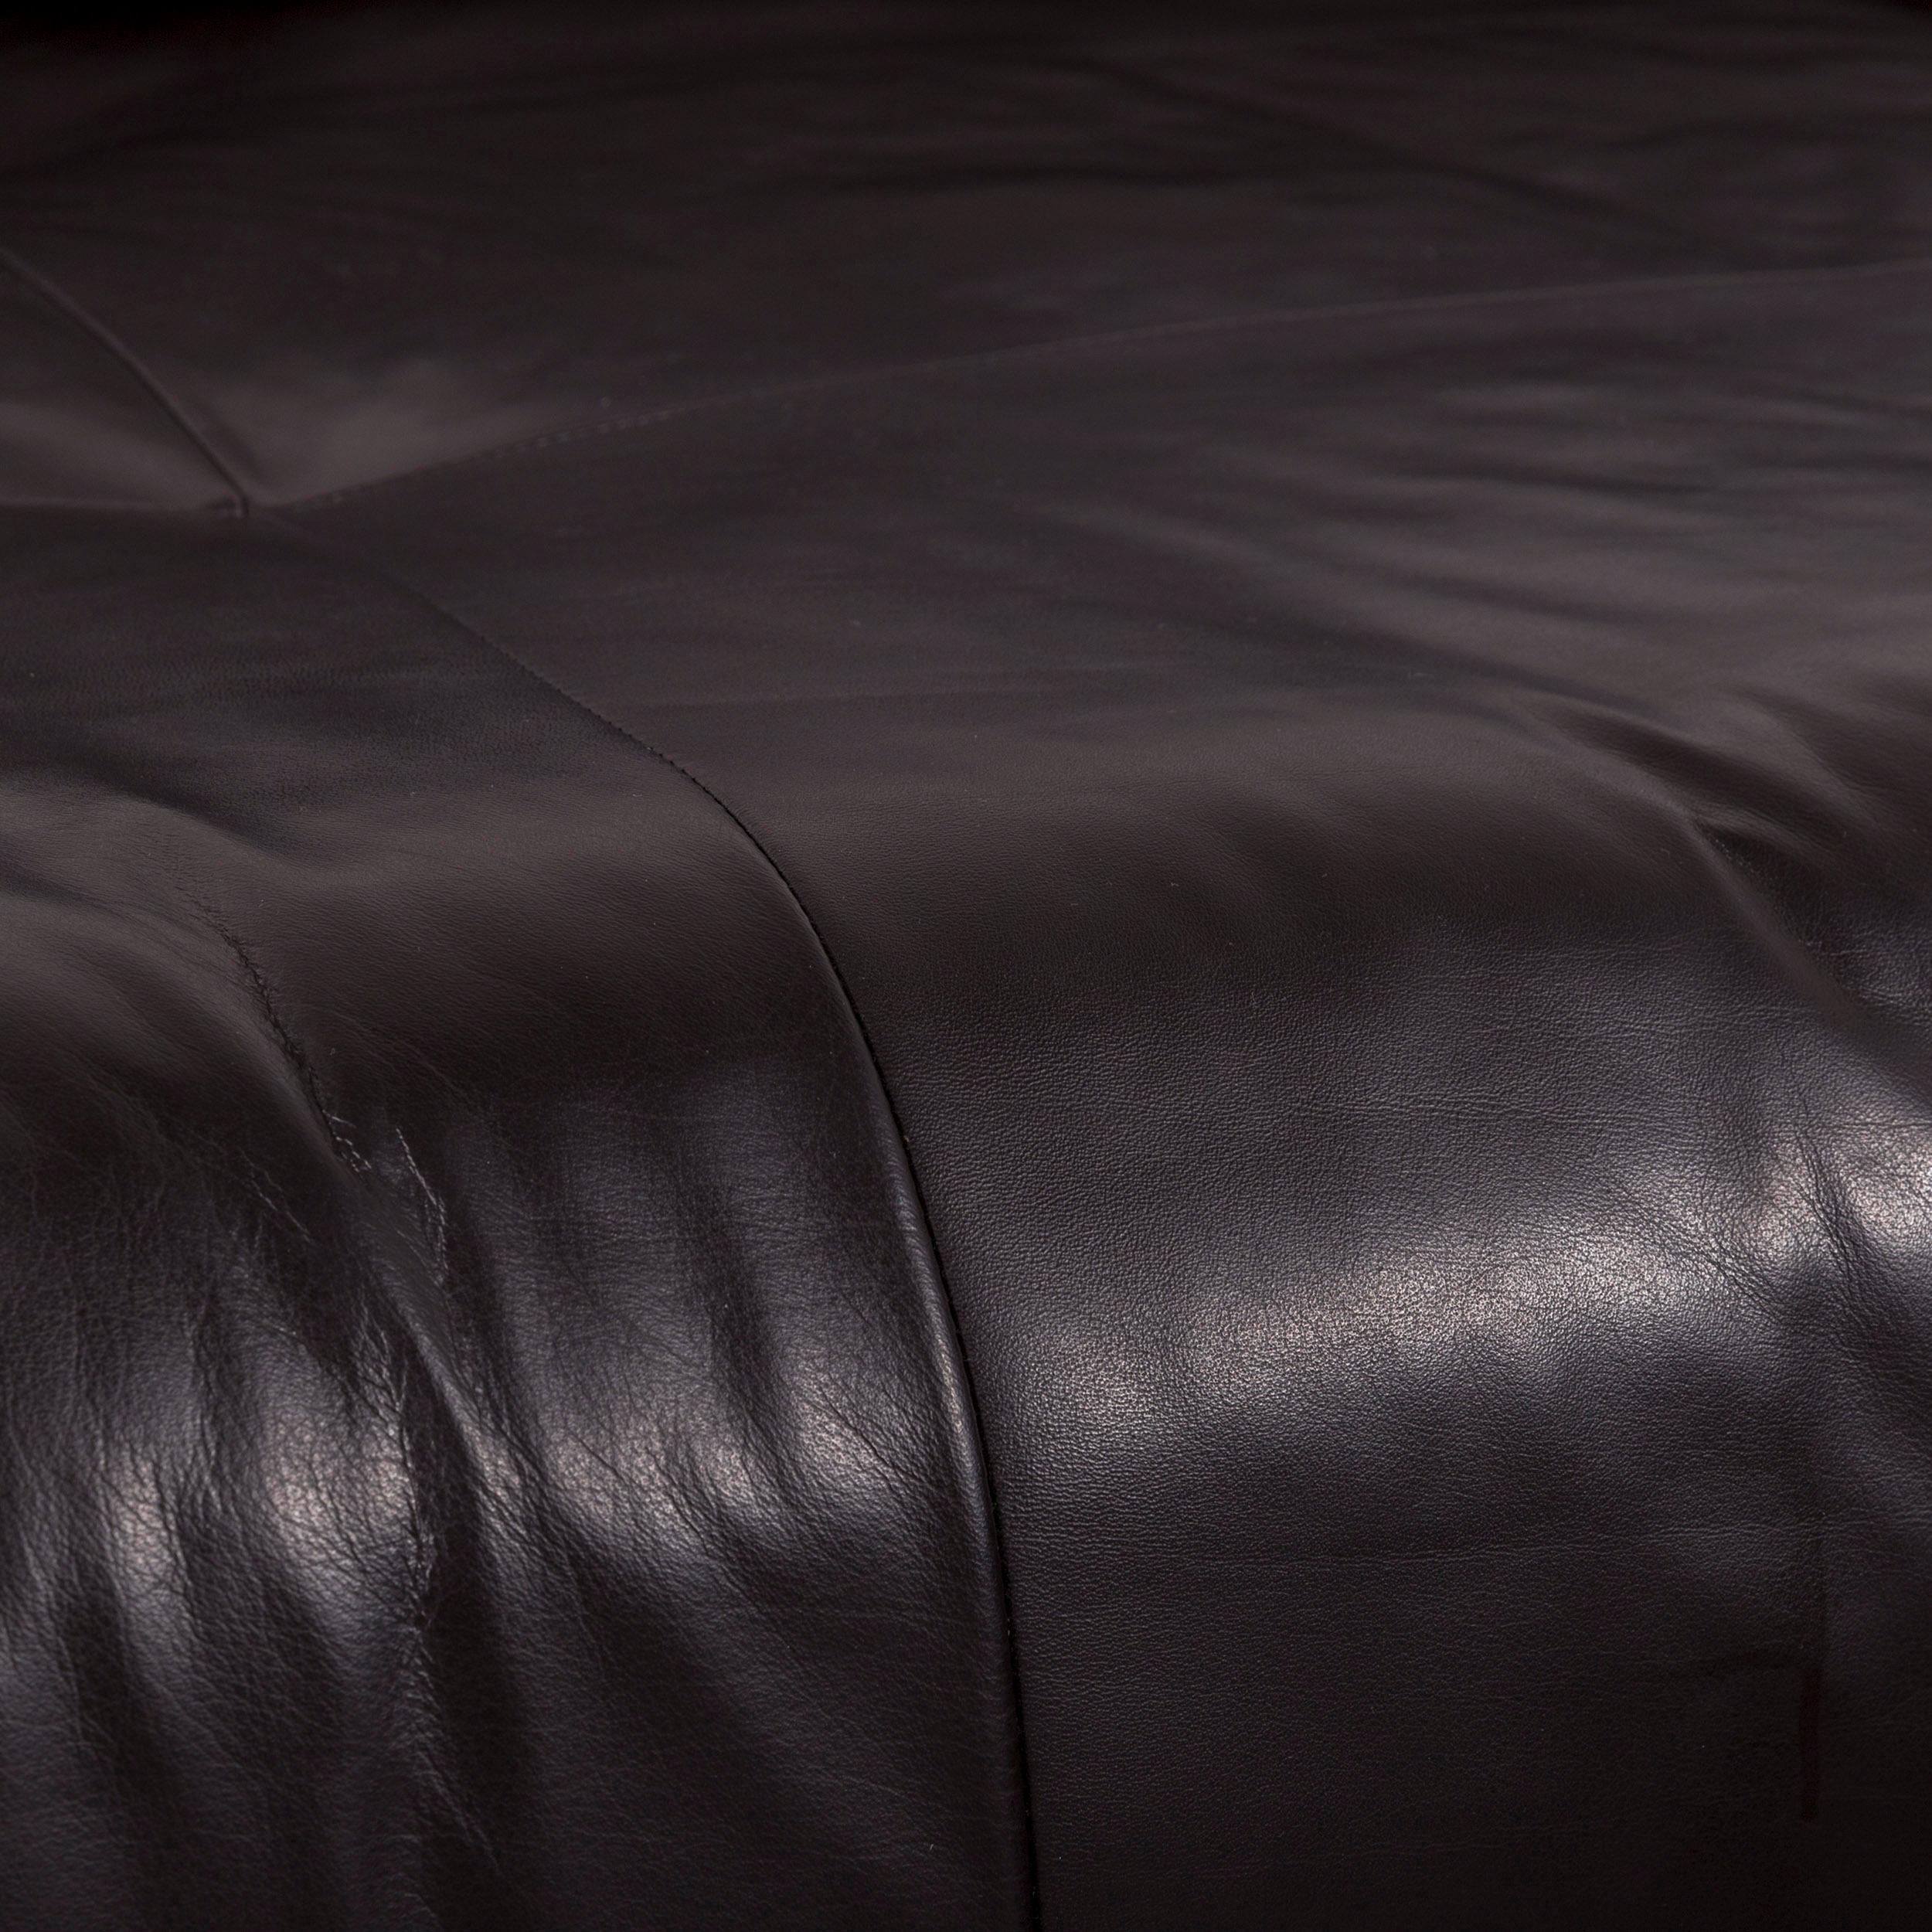 Rolf Benz Dono Designer Leather Corner Sofa Black with Function 2